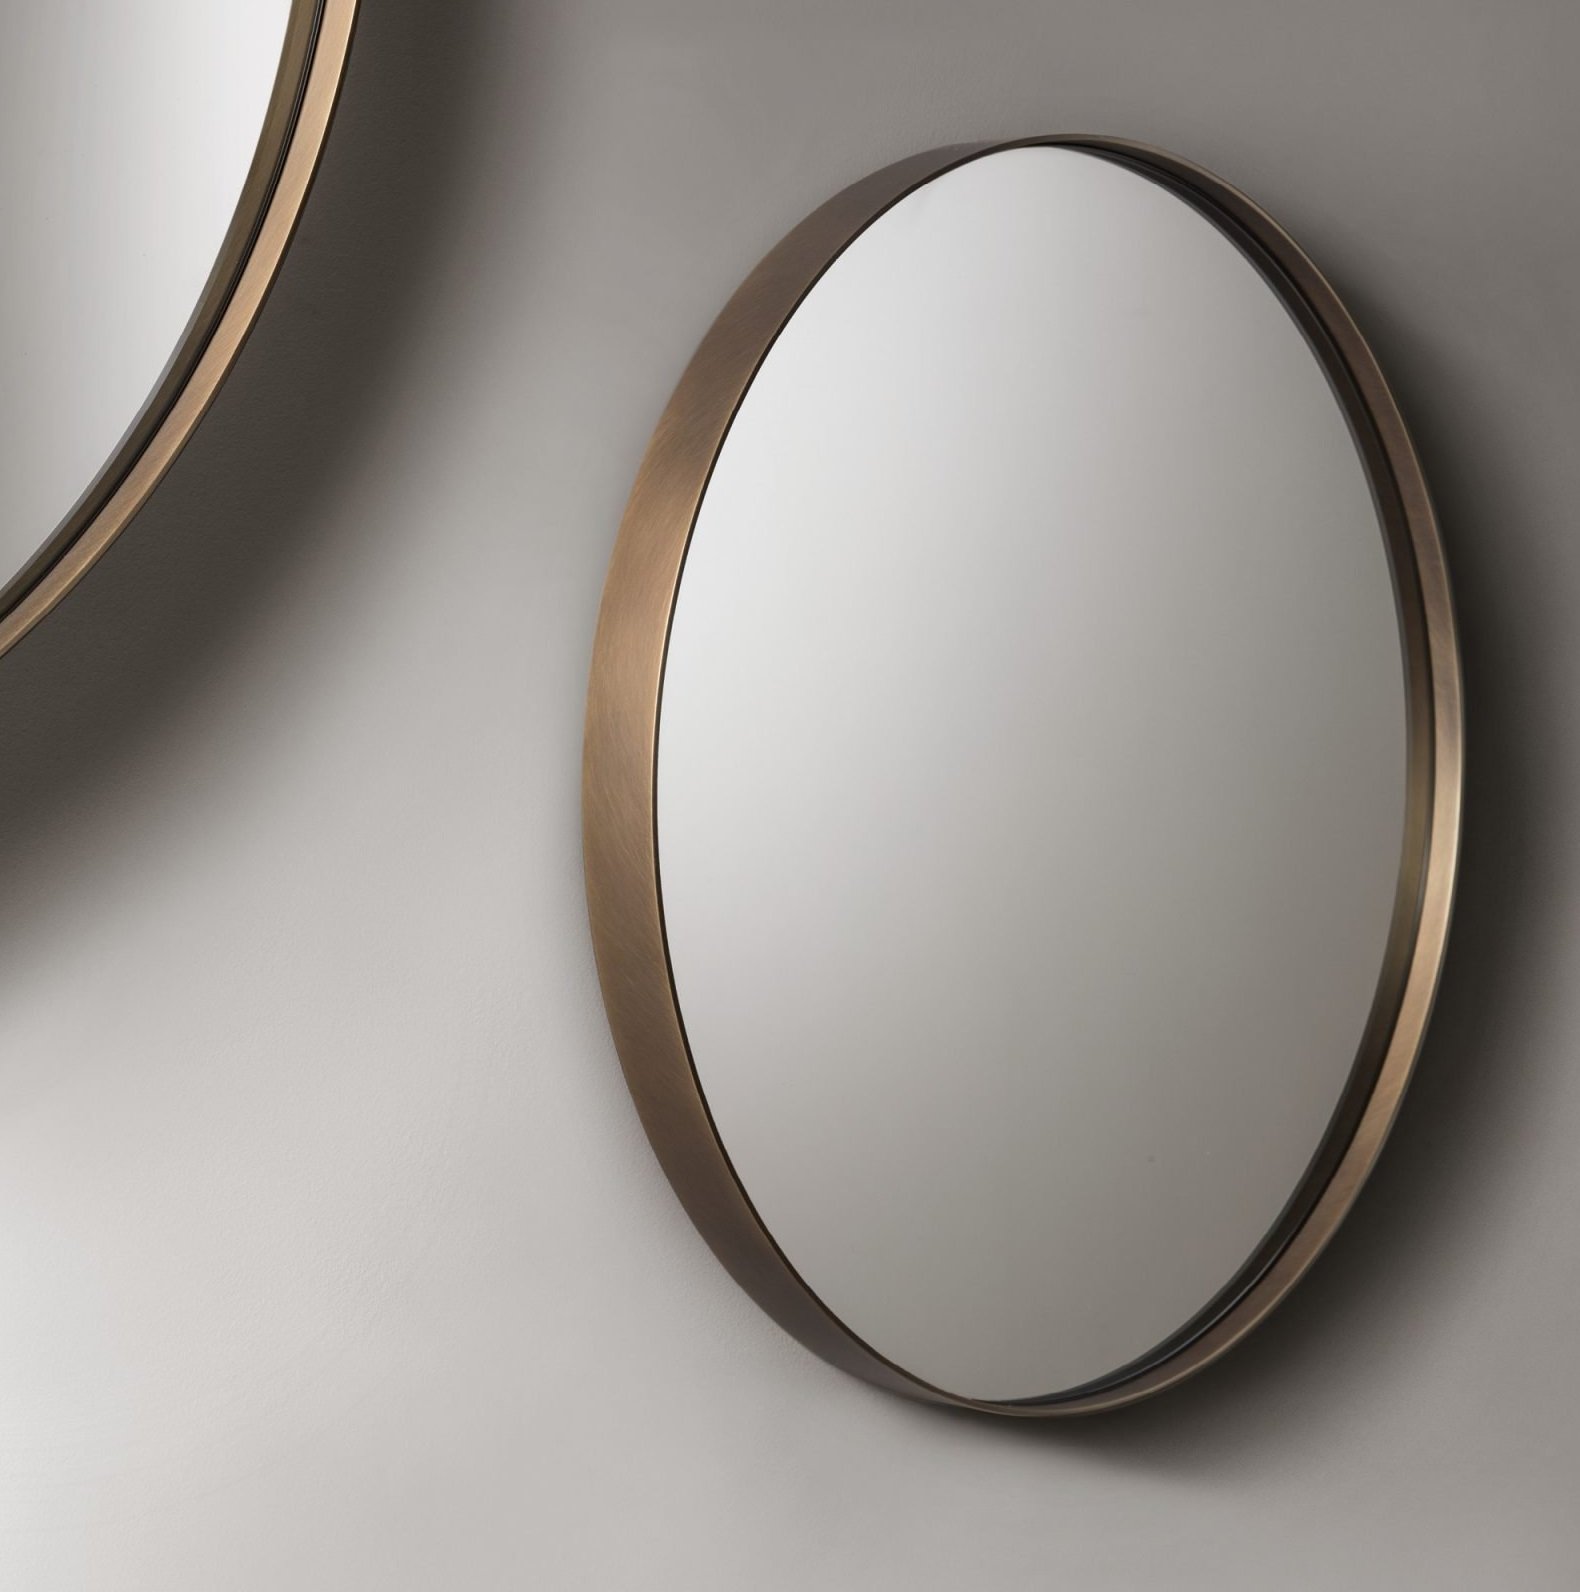 Riflesso Mirror from De Castelli, designed by R&D De Castelli